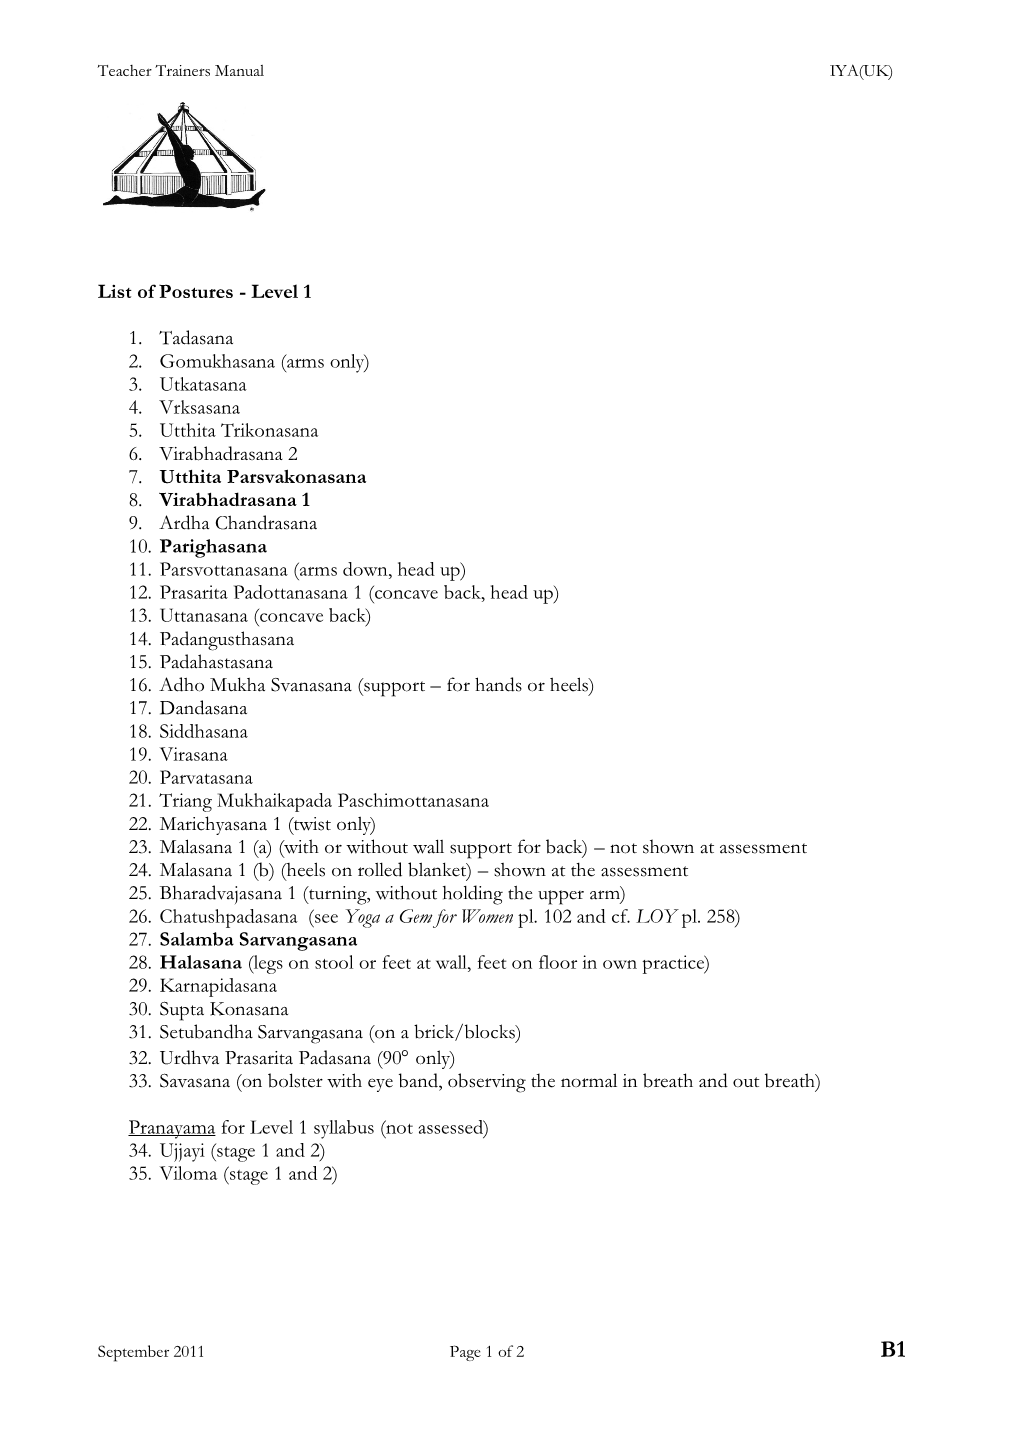 List of Postures - Level 1